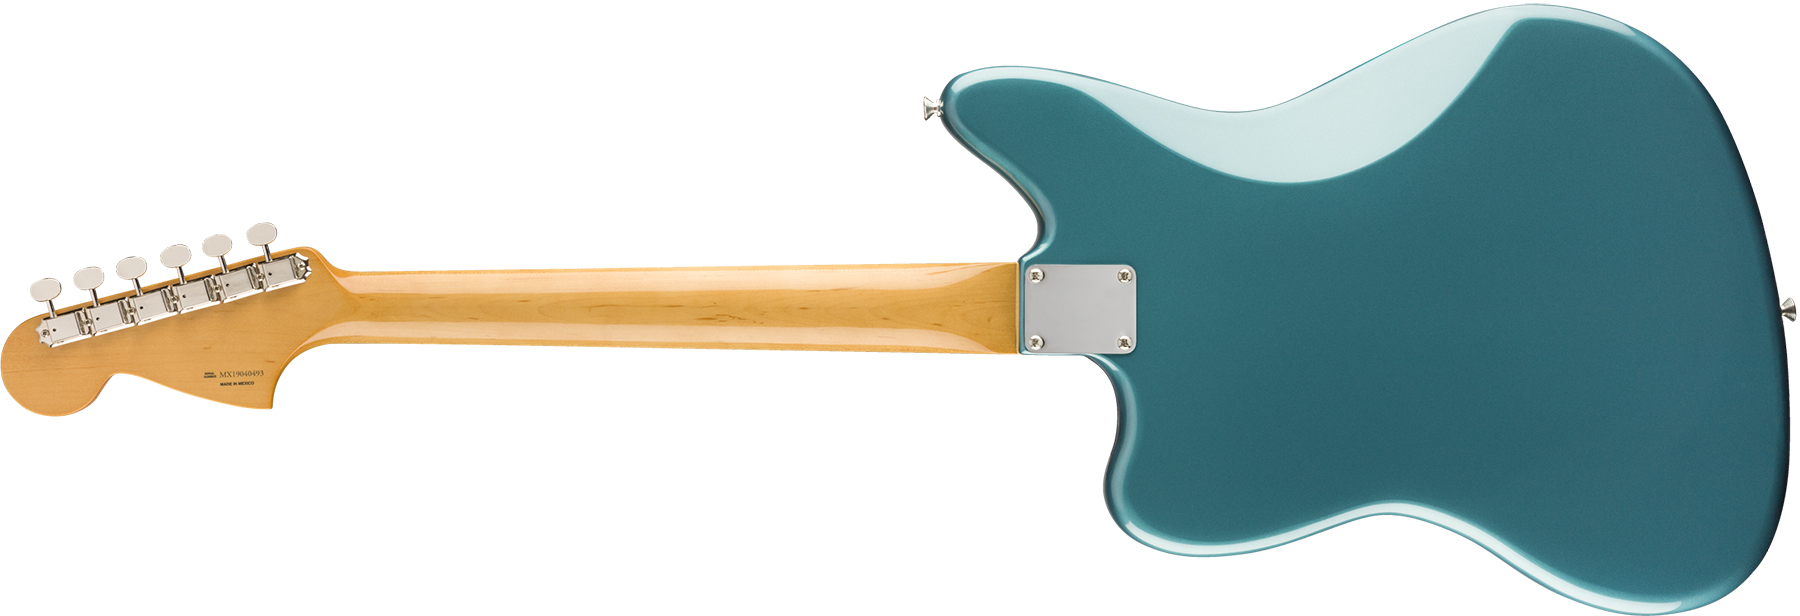 Fender Jaguar 60s Vintera Vintage Mex Pf - Ocean Turquoise - Guitarra electrica retro rock - Variation 1